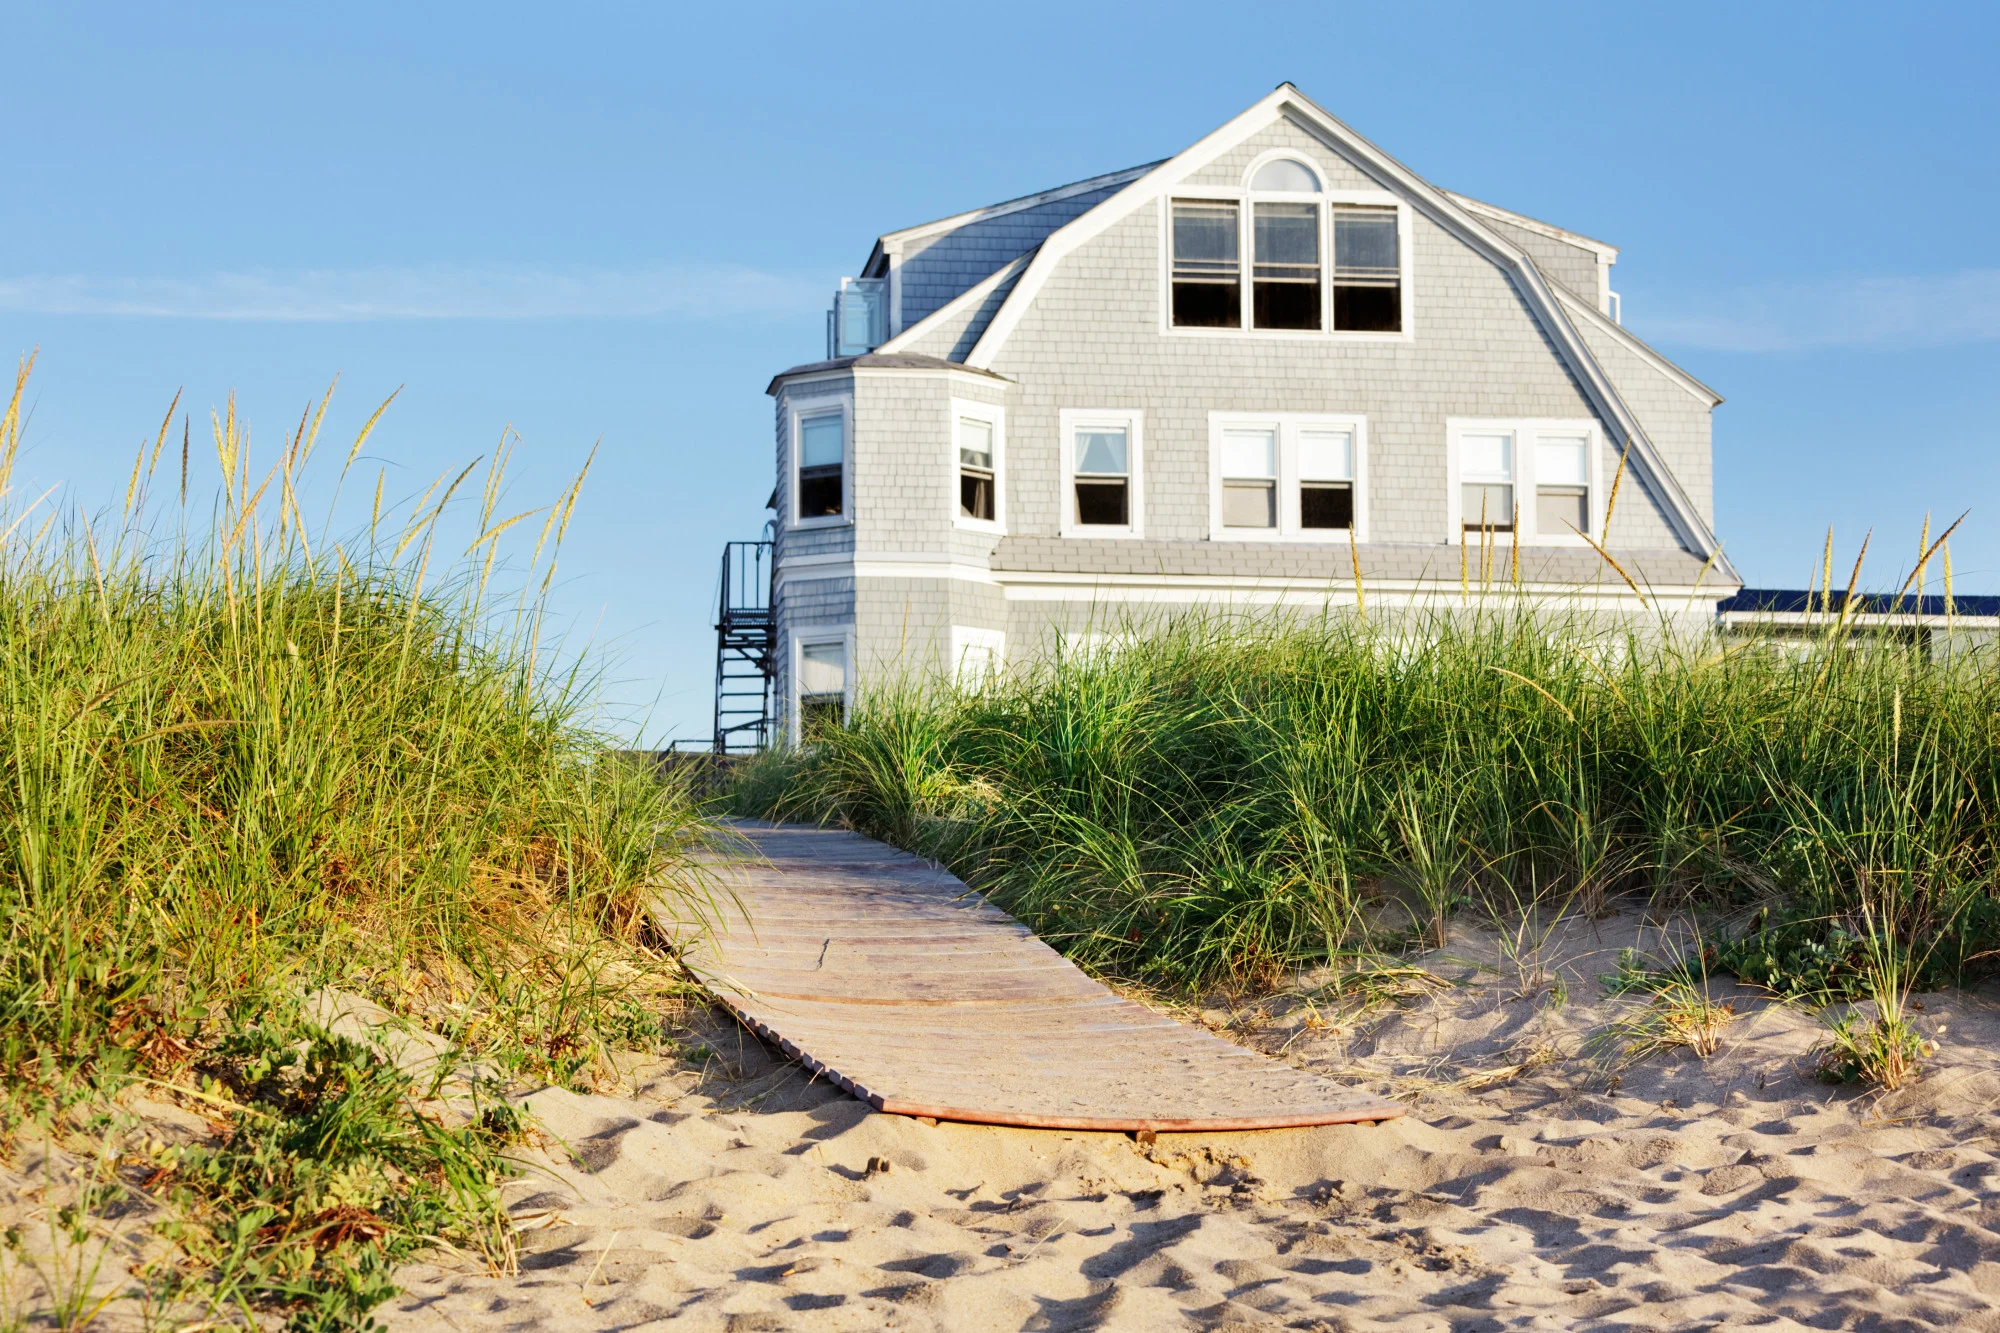 5 Peak Season Pricing Strategies for Vacation Rentals